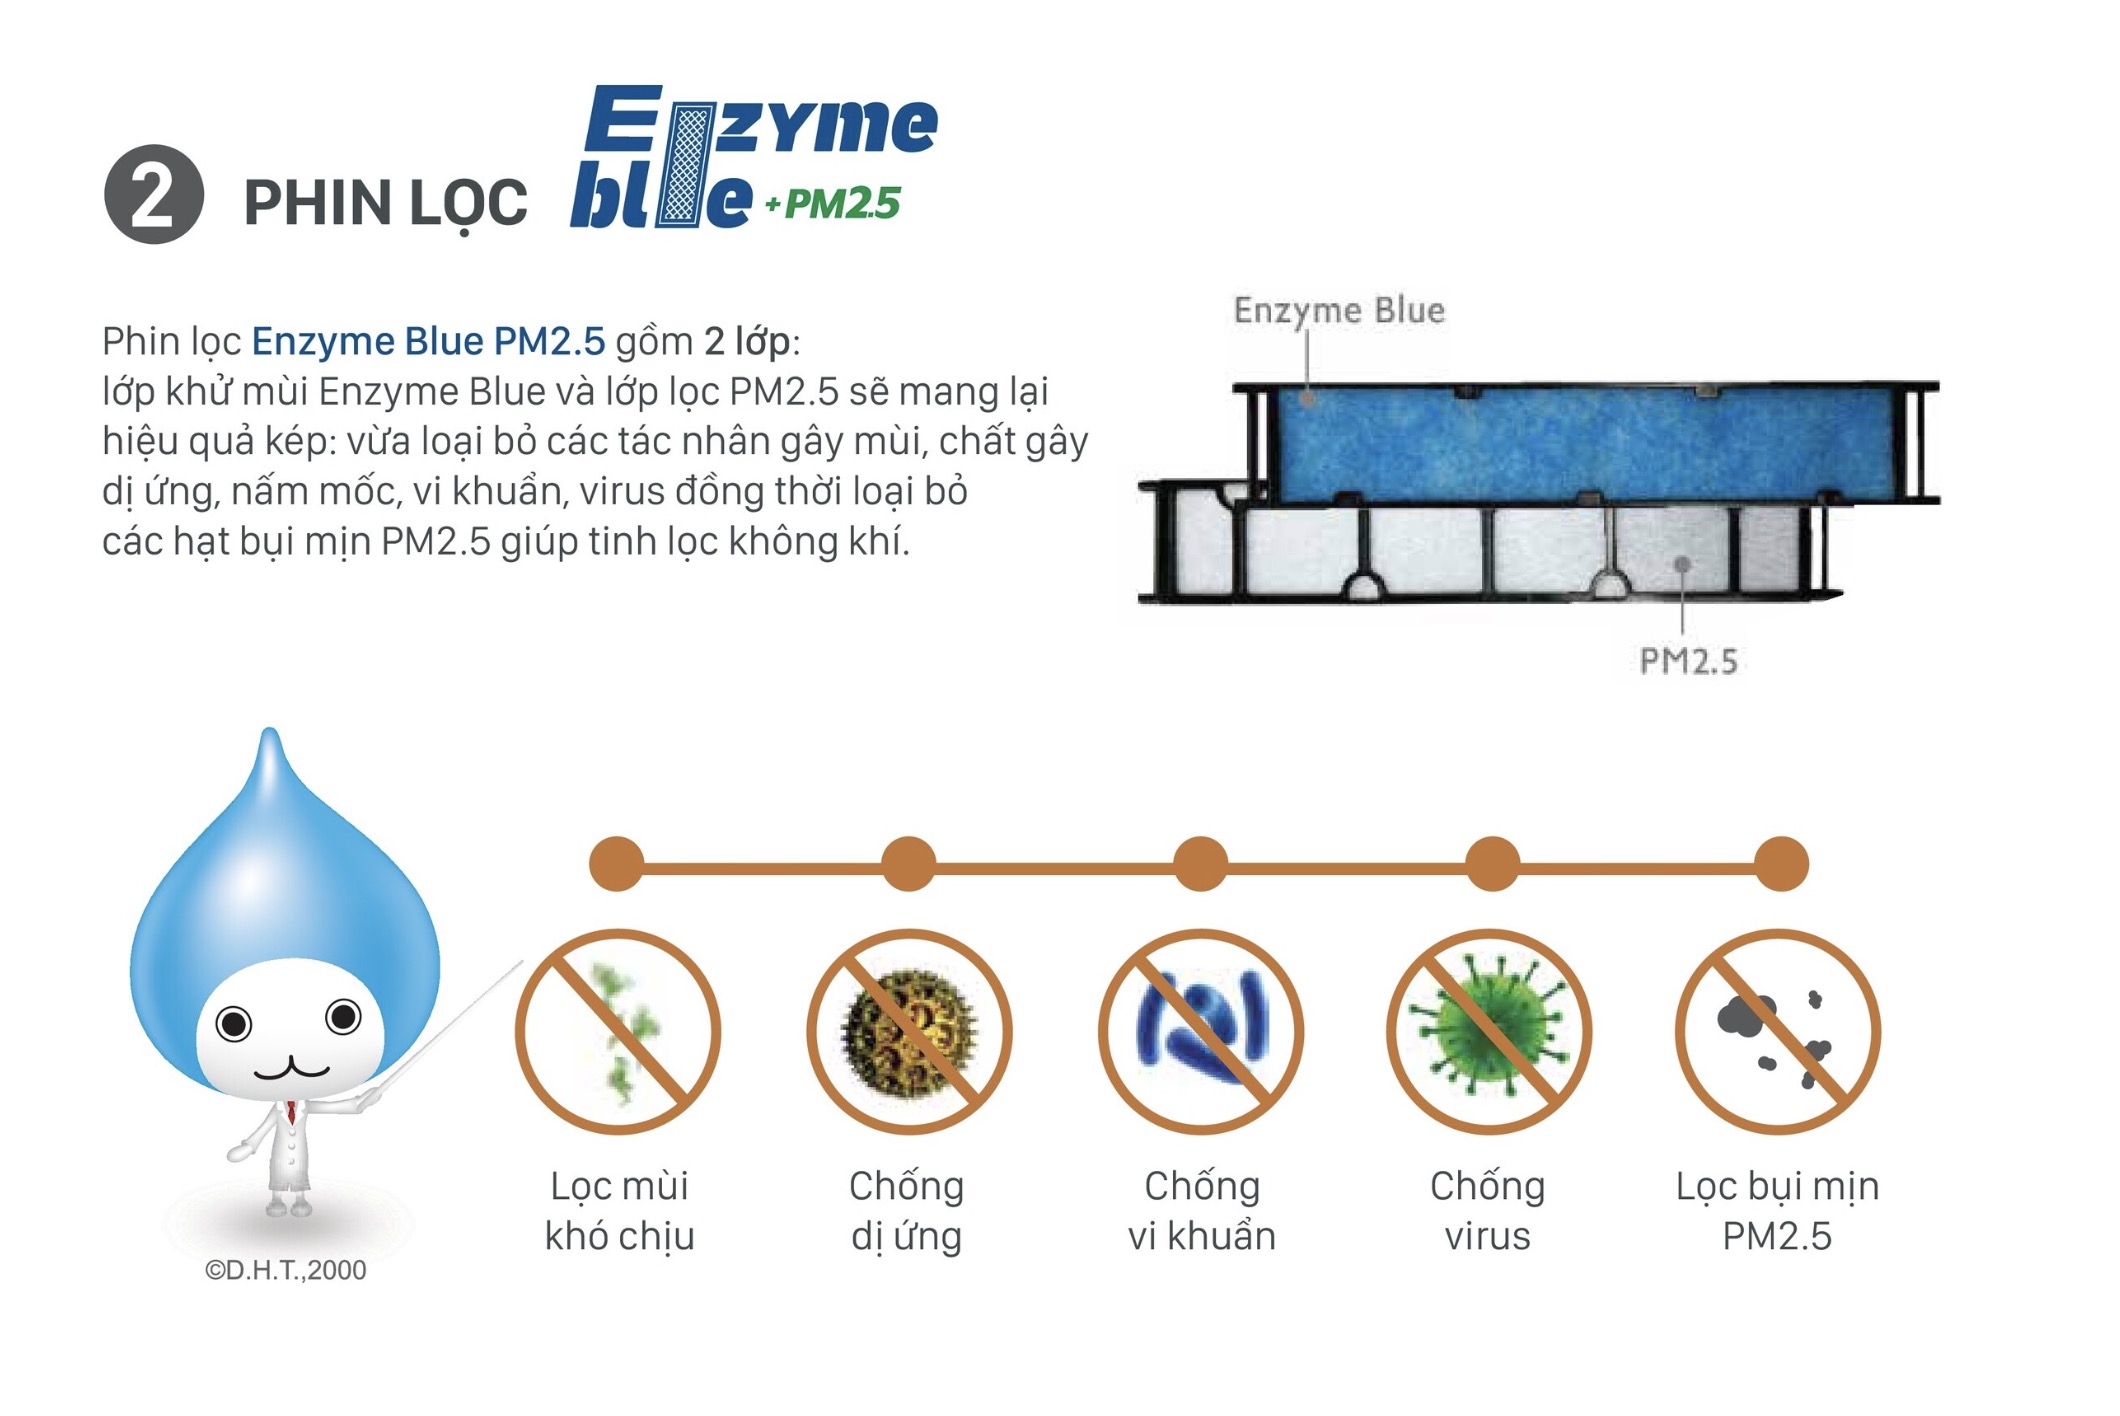 phin-loc-enzyme-blue pm2.5.jpg